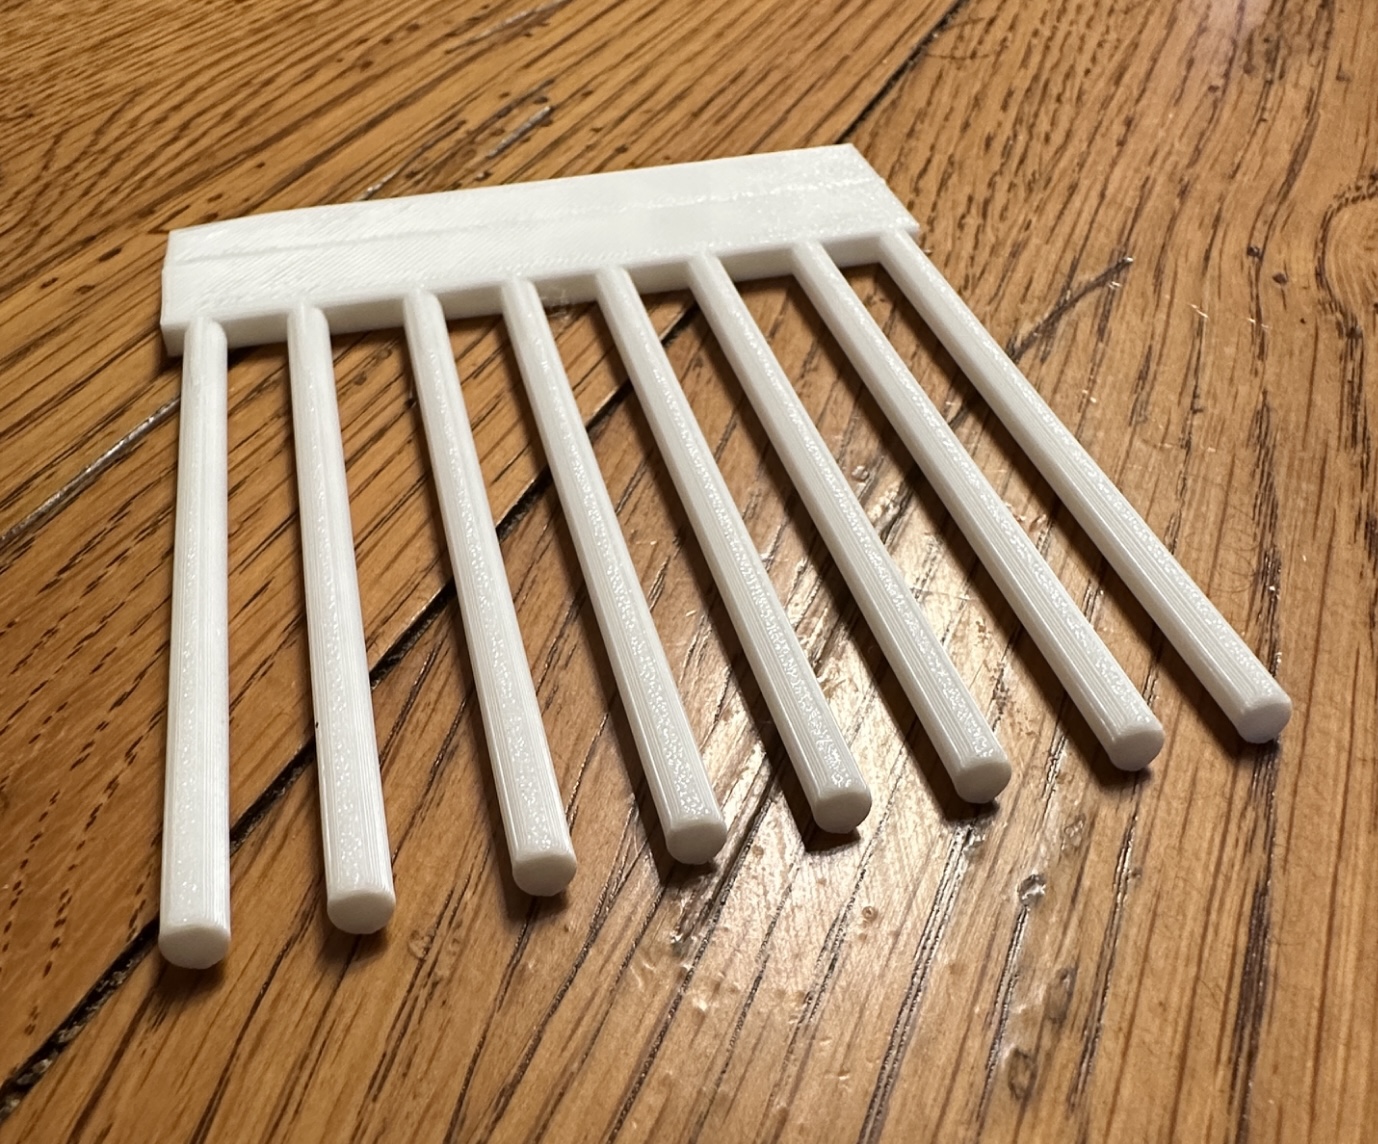 3D Printed Soap Combing Tool